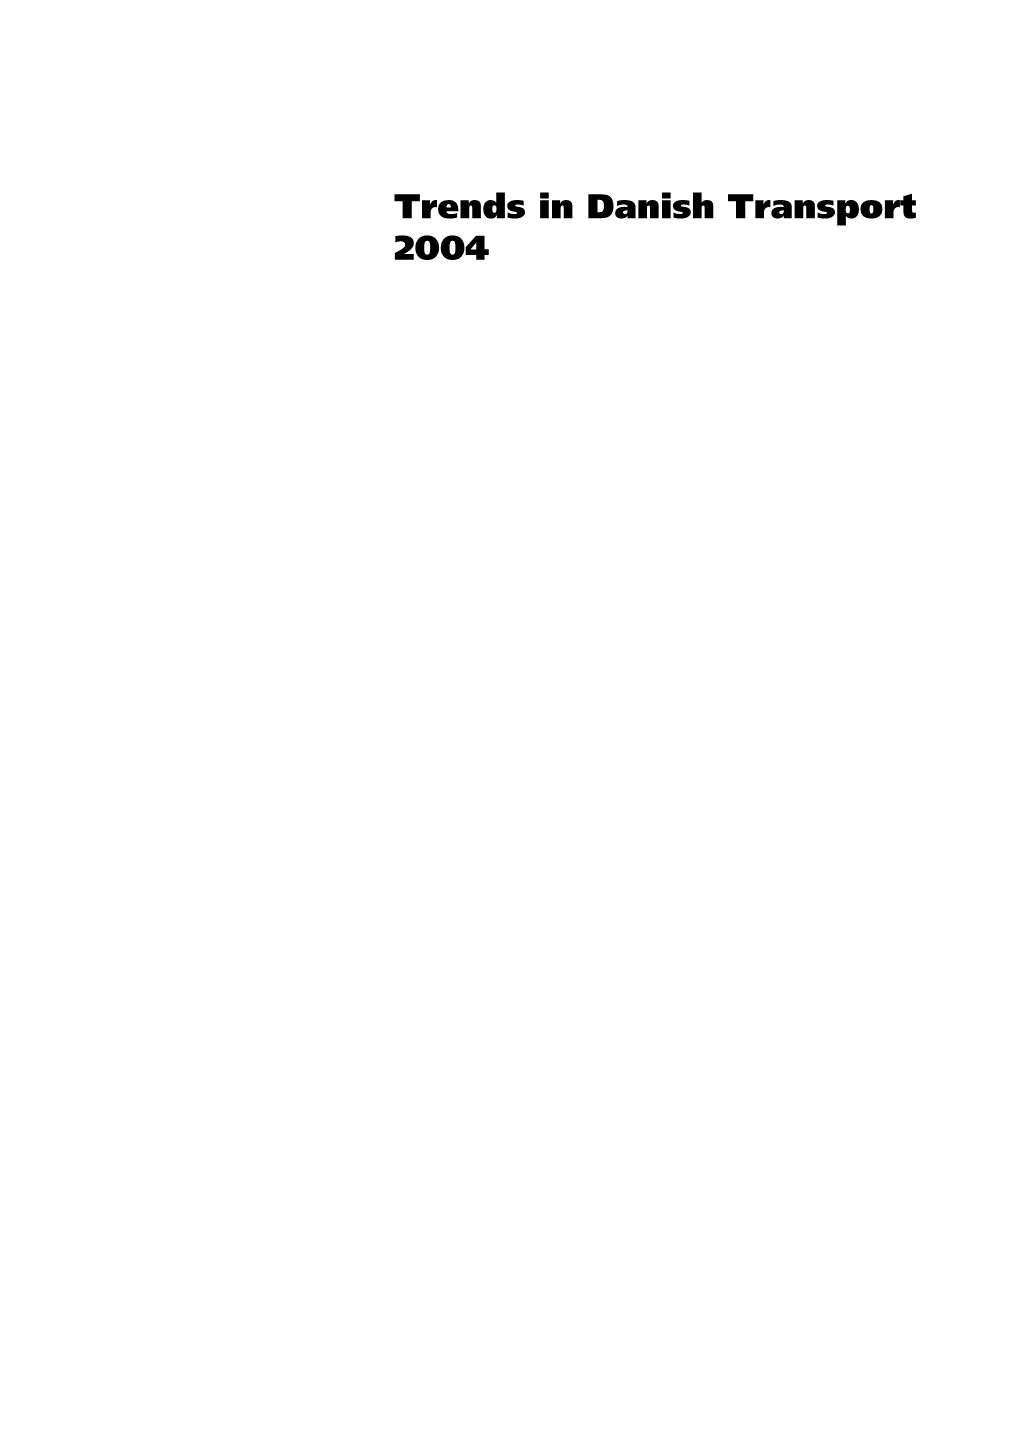 Trends in Danish Transport 2004